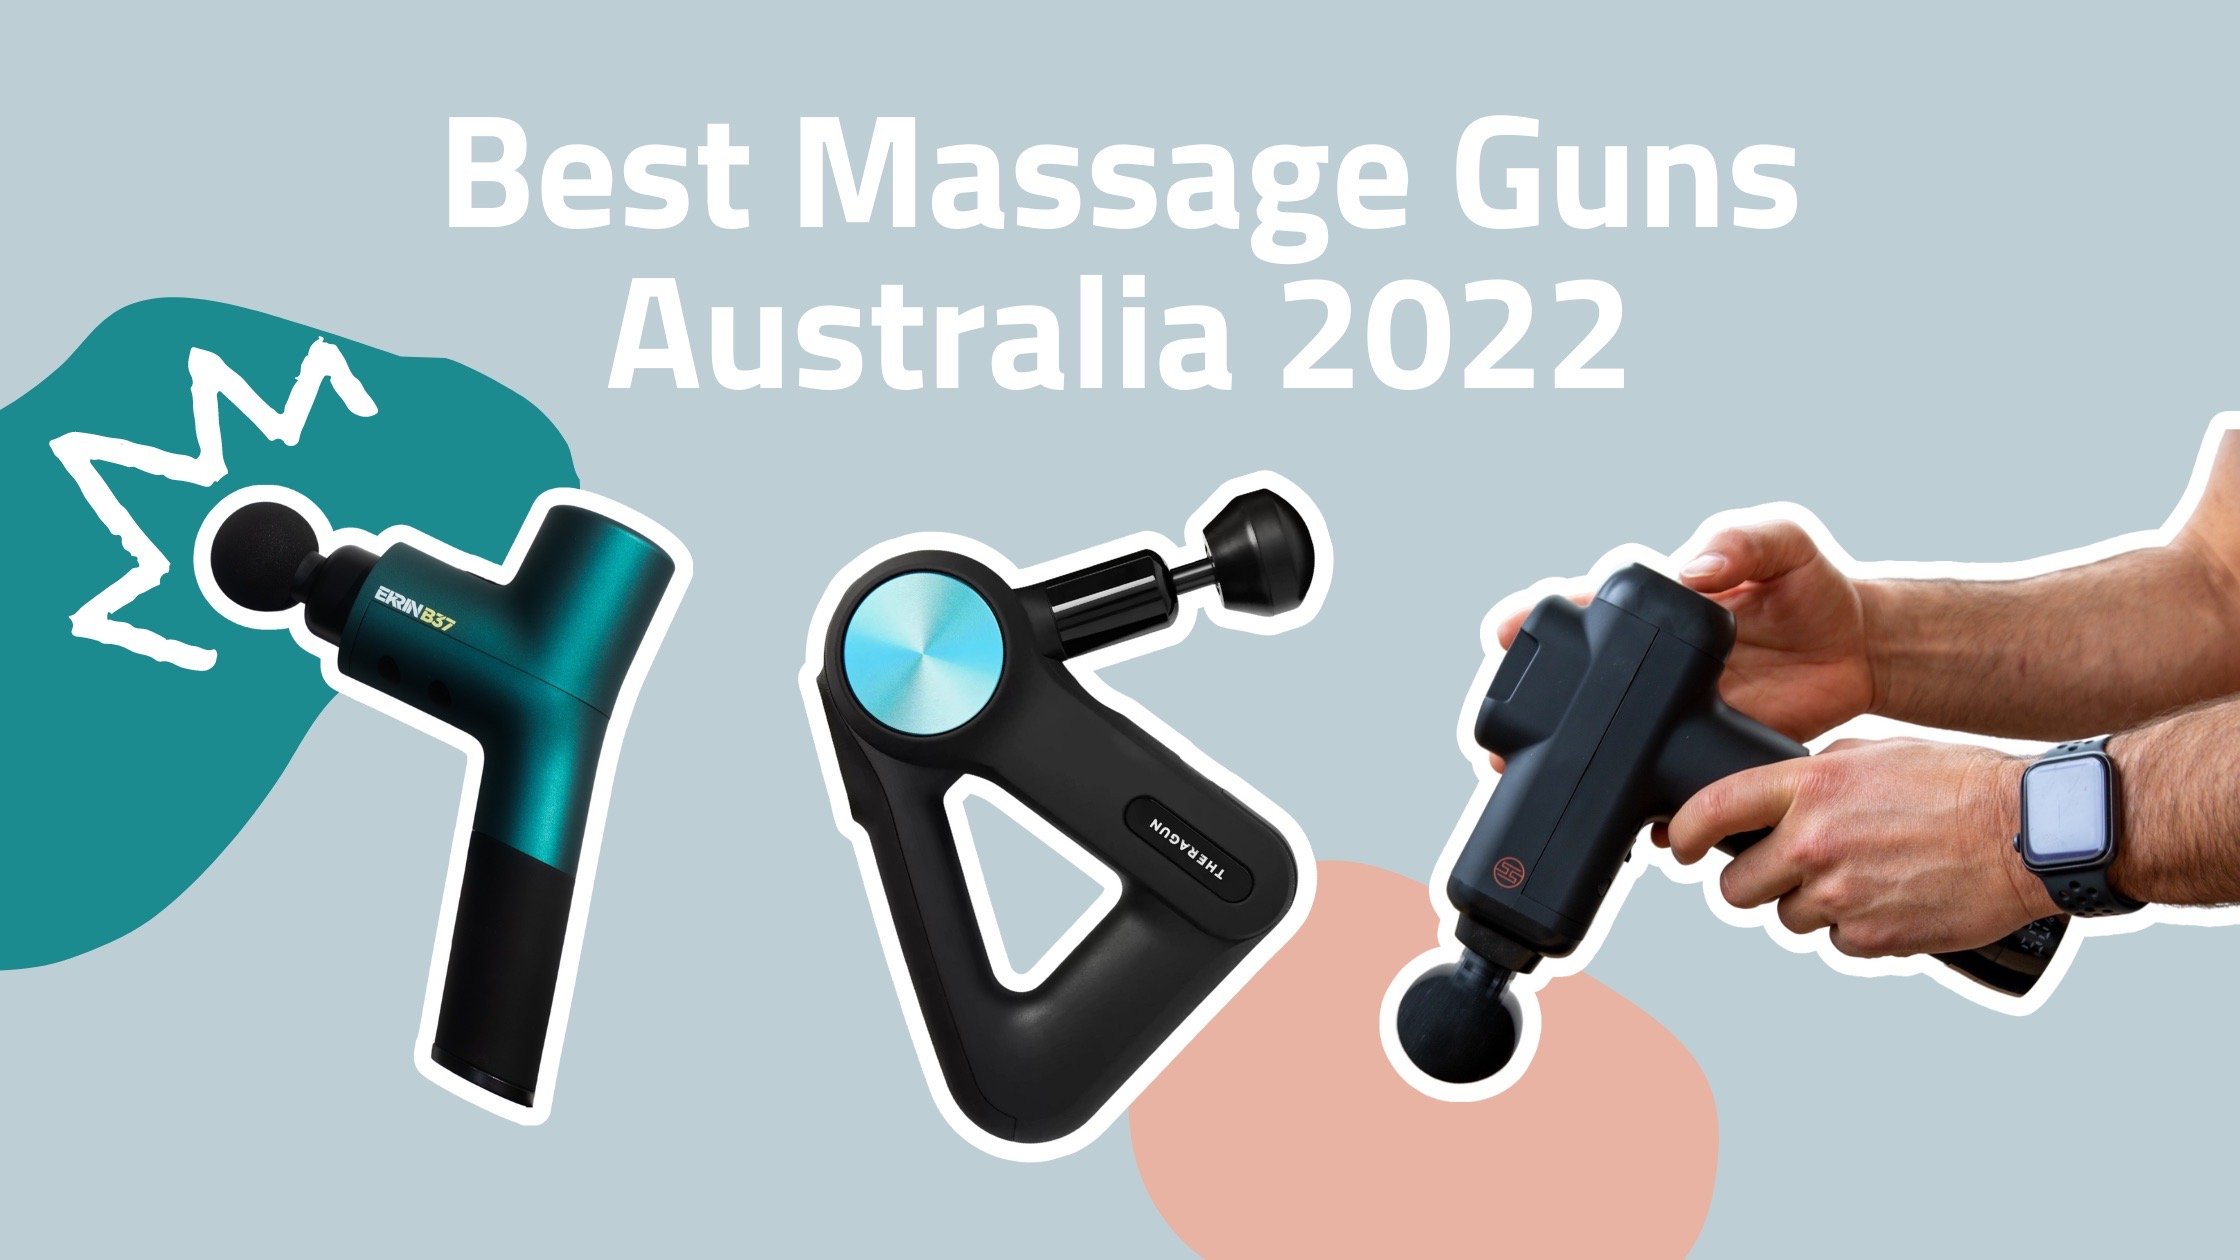 Best Heated Massage Gun: 2 Runner-Ups And 1 To Avoid